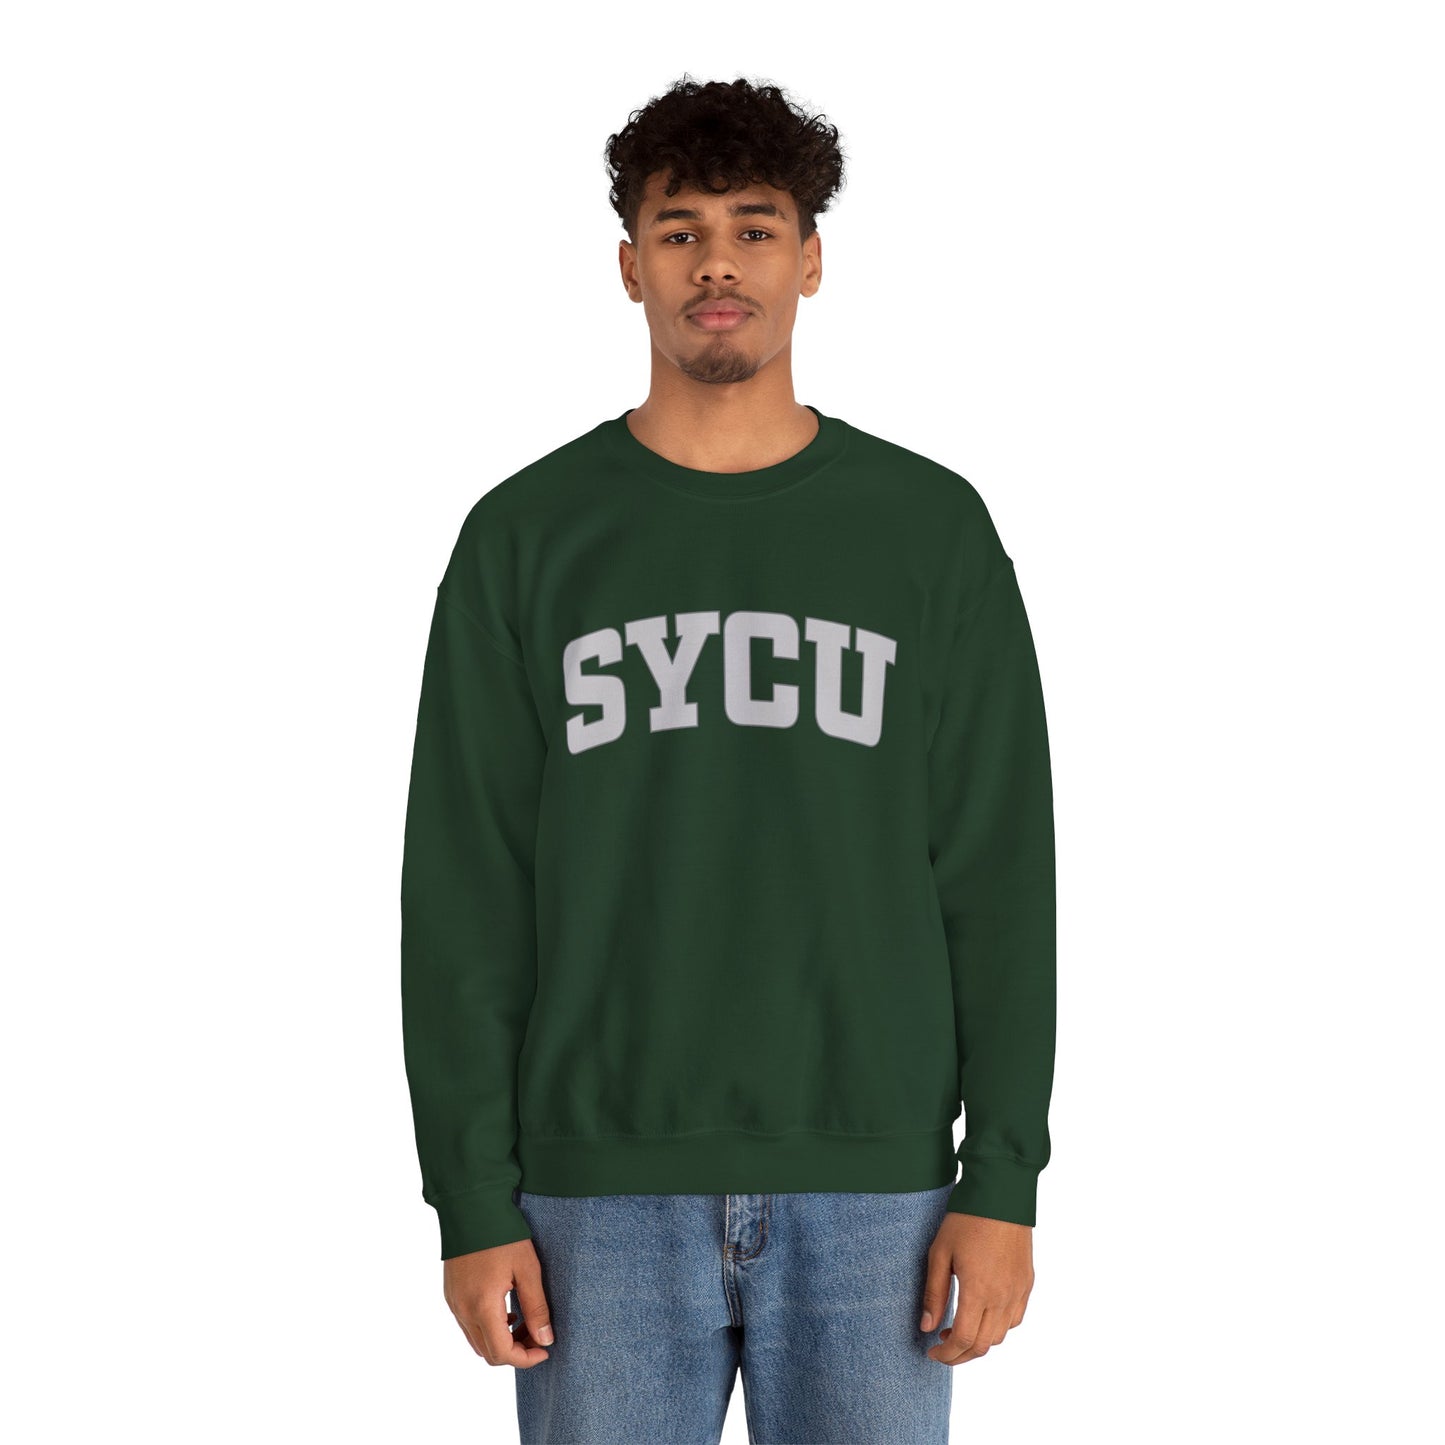 Grey College | SYCU | Crewneck